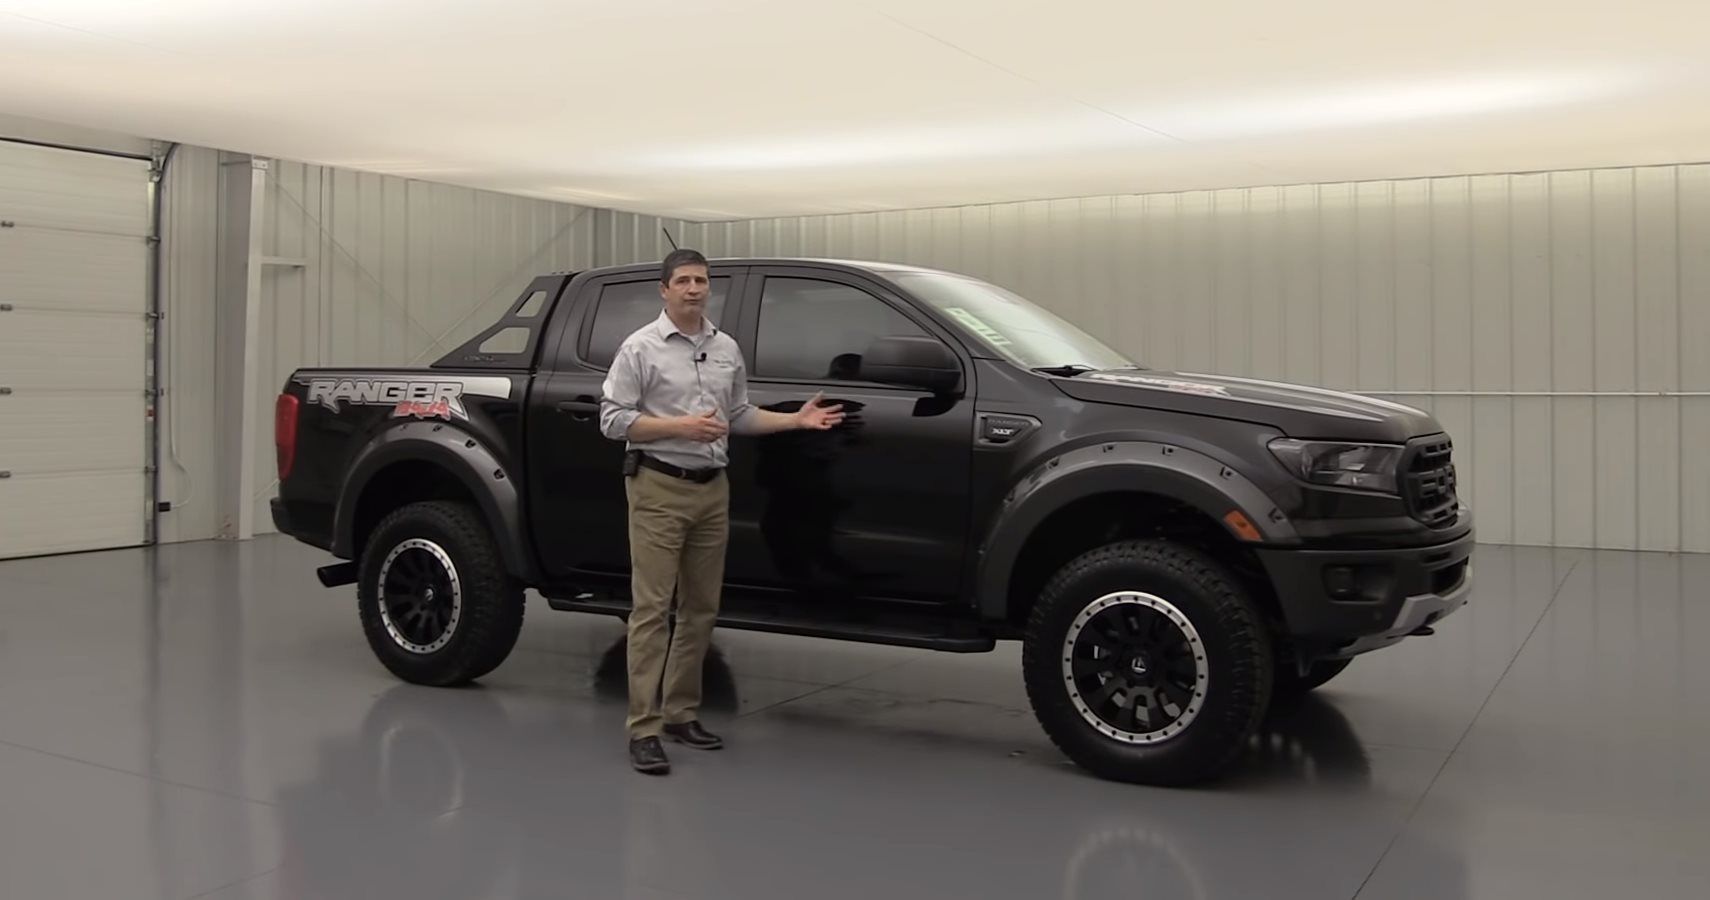 Raptor Ranger Still Won't Come To America, But Kansas Ford Dealer Offers Next Best Thing